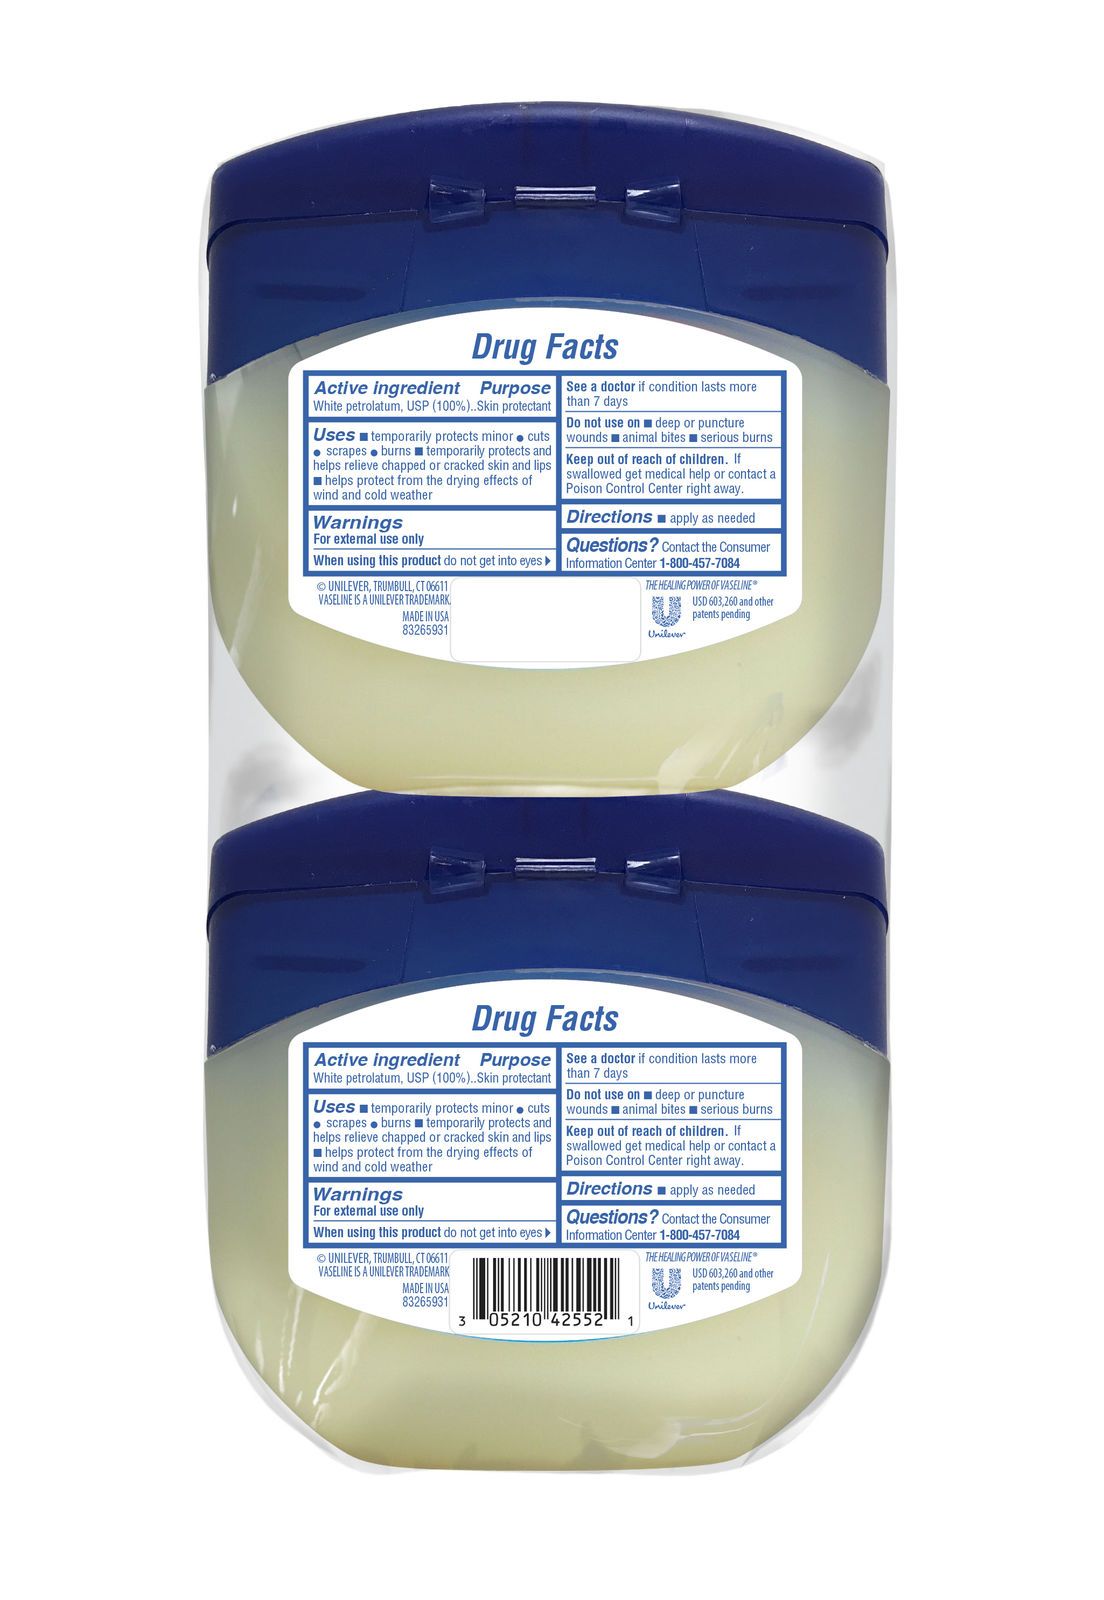 Vaseline Baby Pure Petroleum Jelly Jar, Fresh Scent - 13 oz, 2 Pack